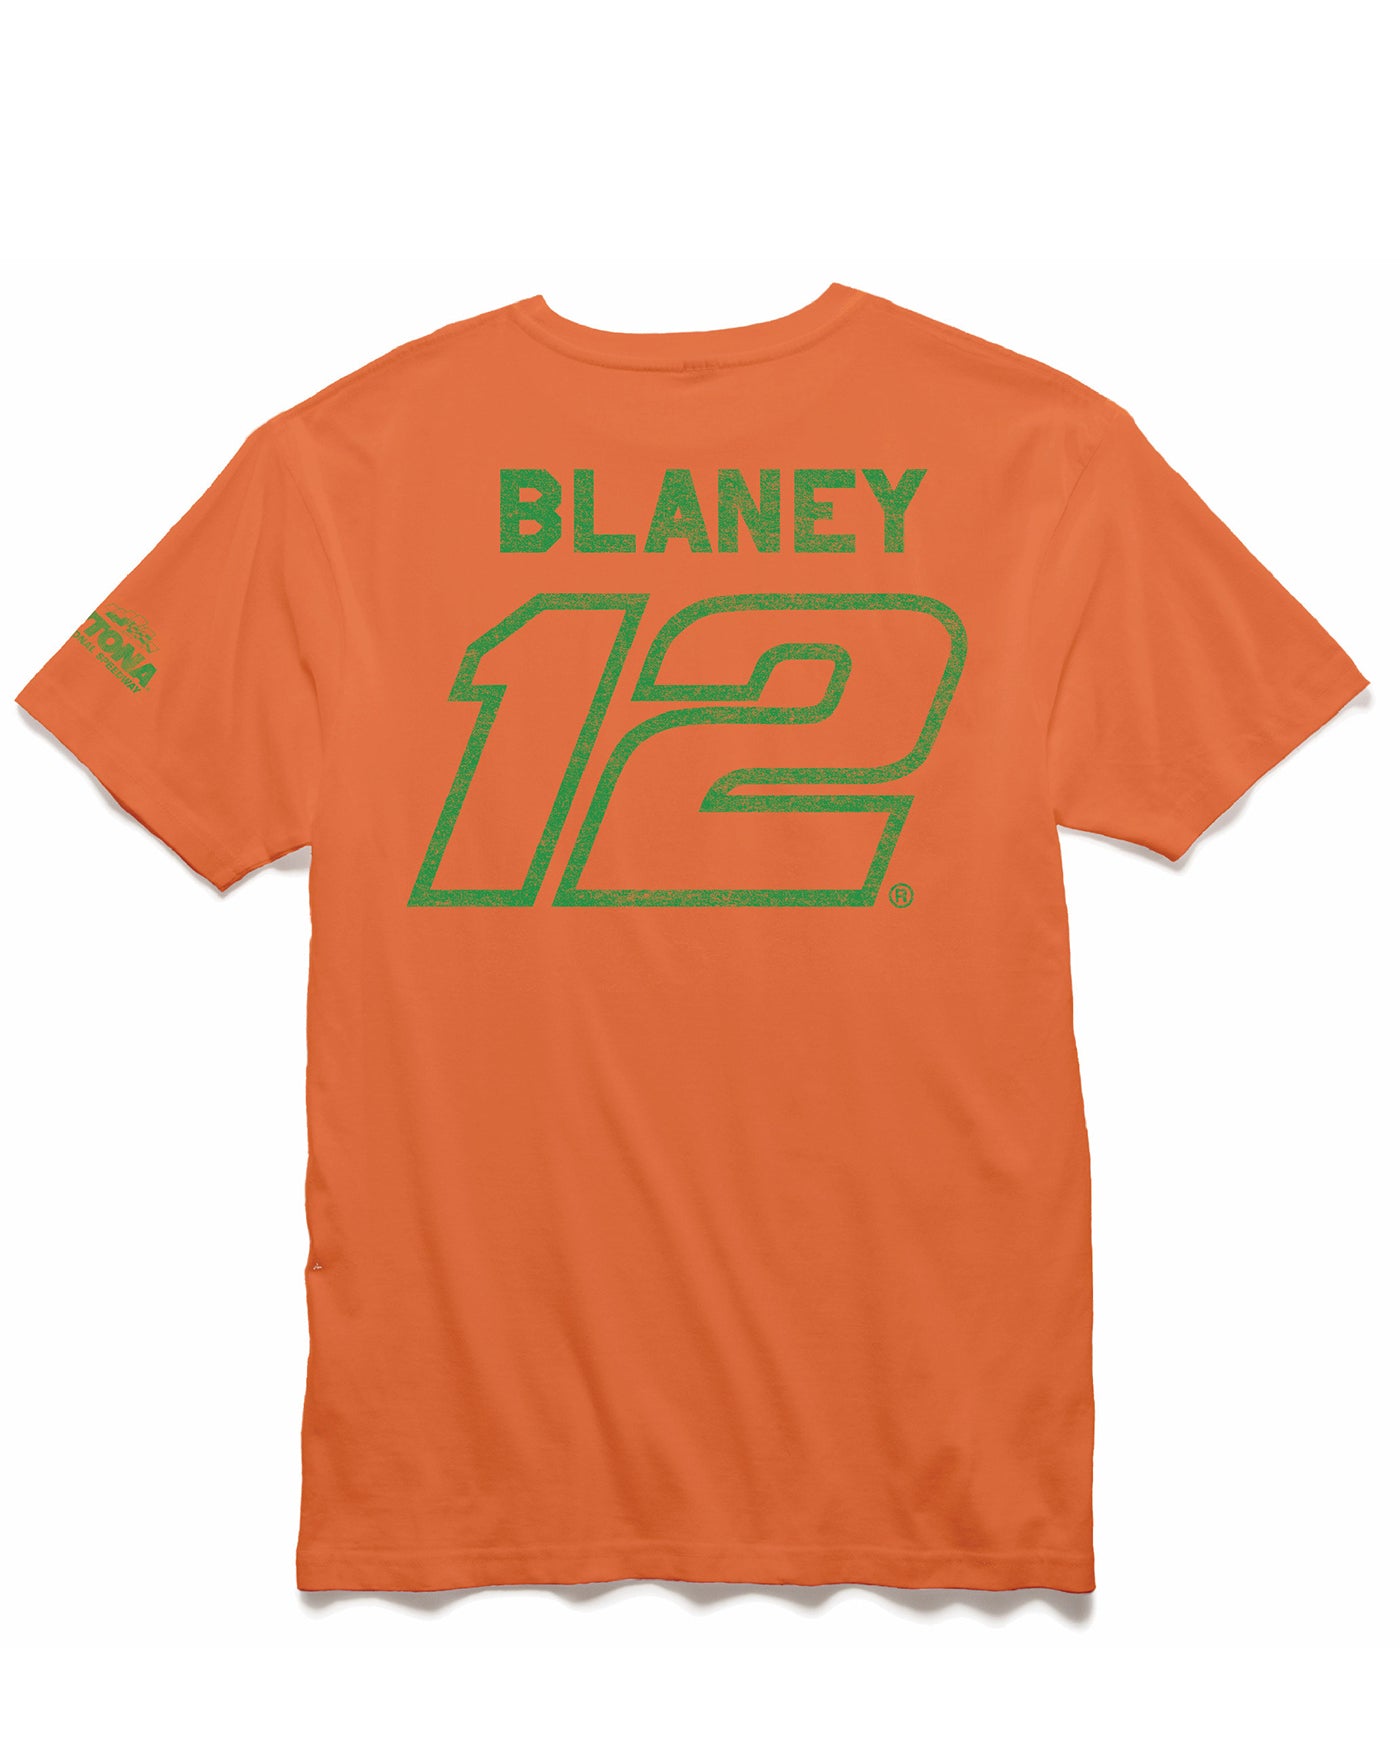 BLANEY #12 DAYTONA TEE